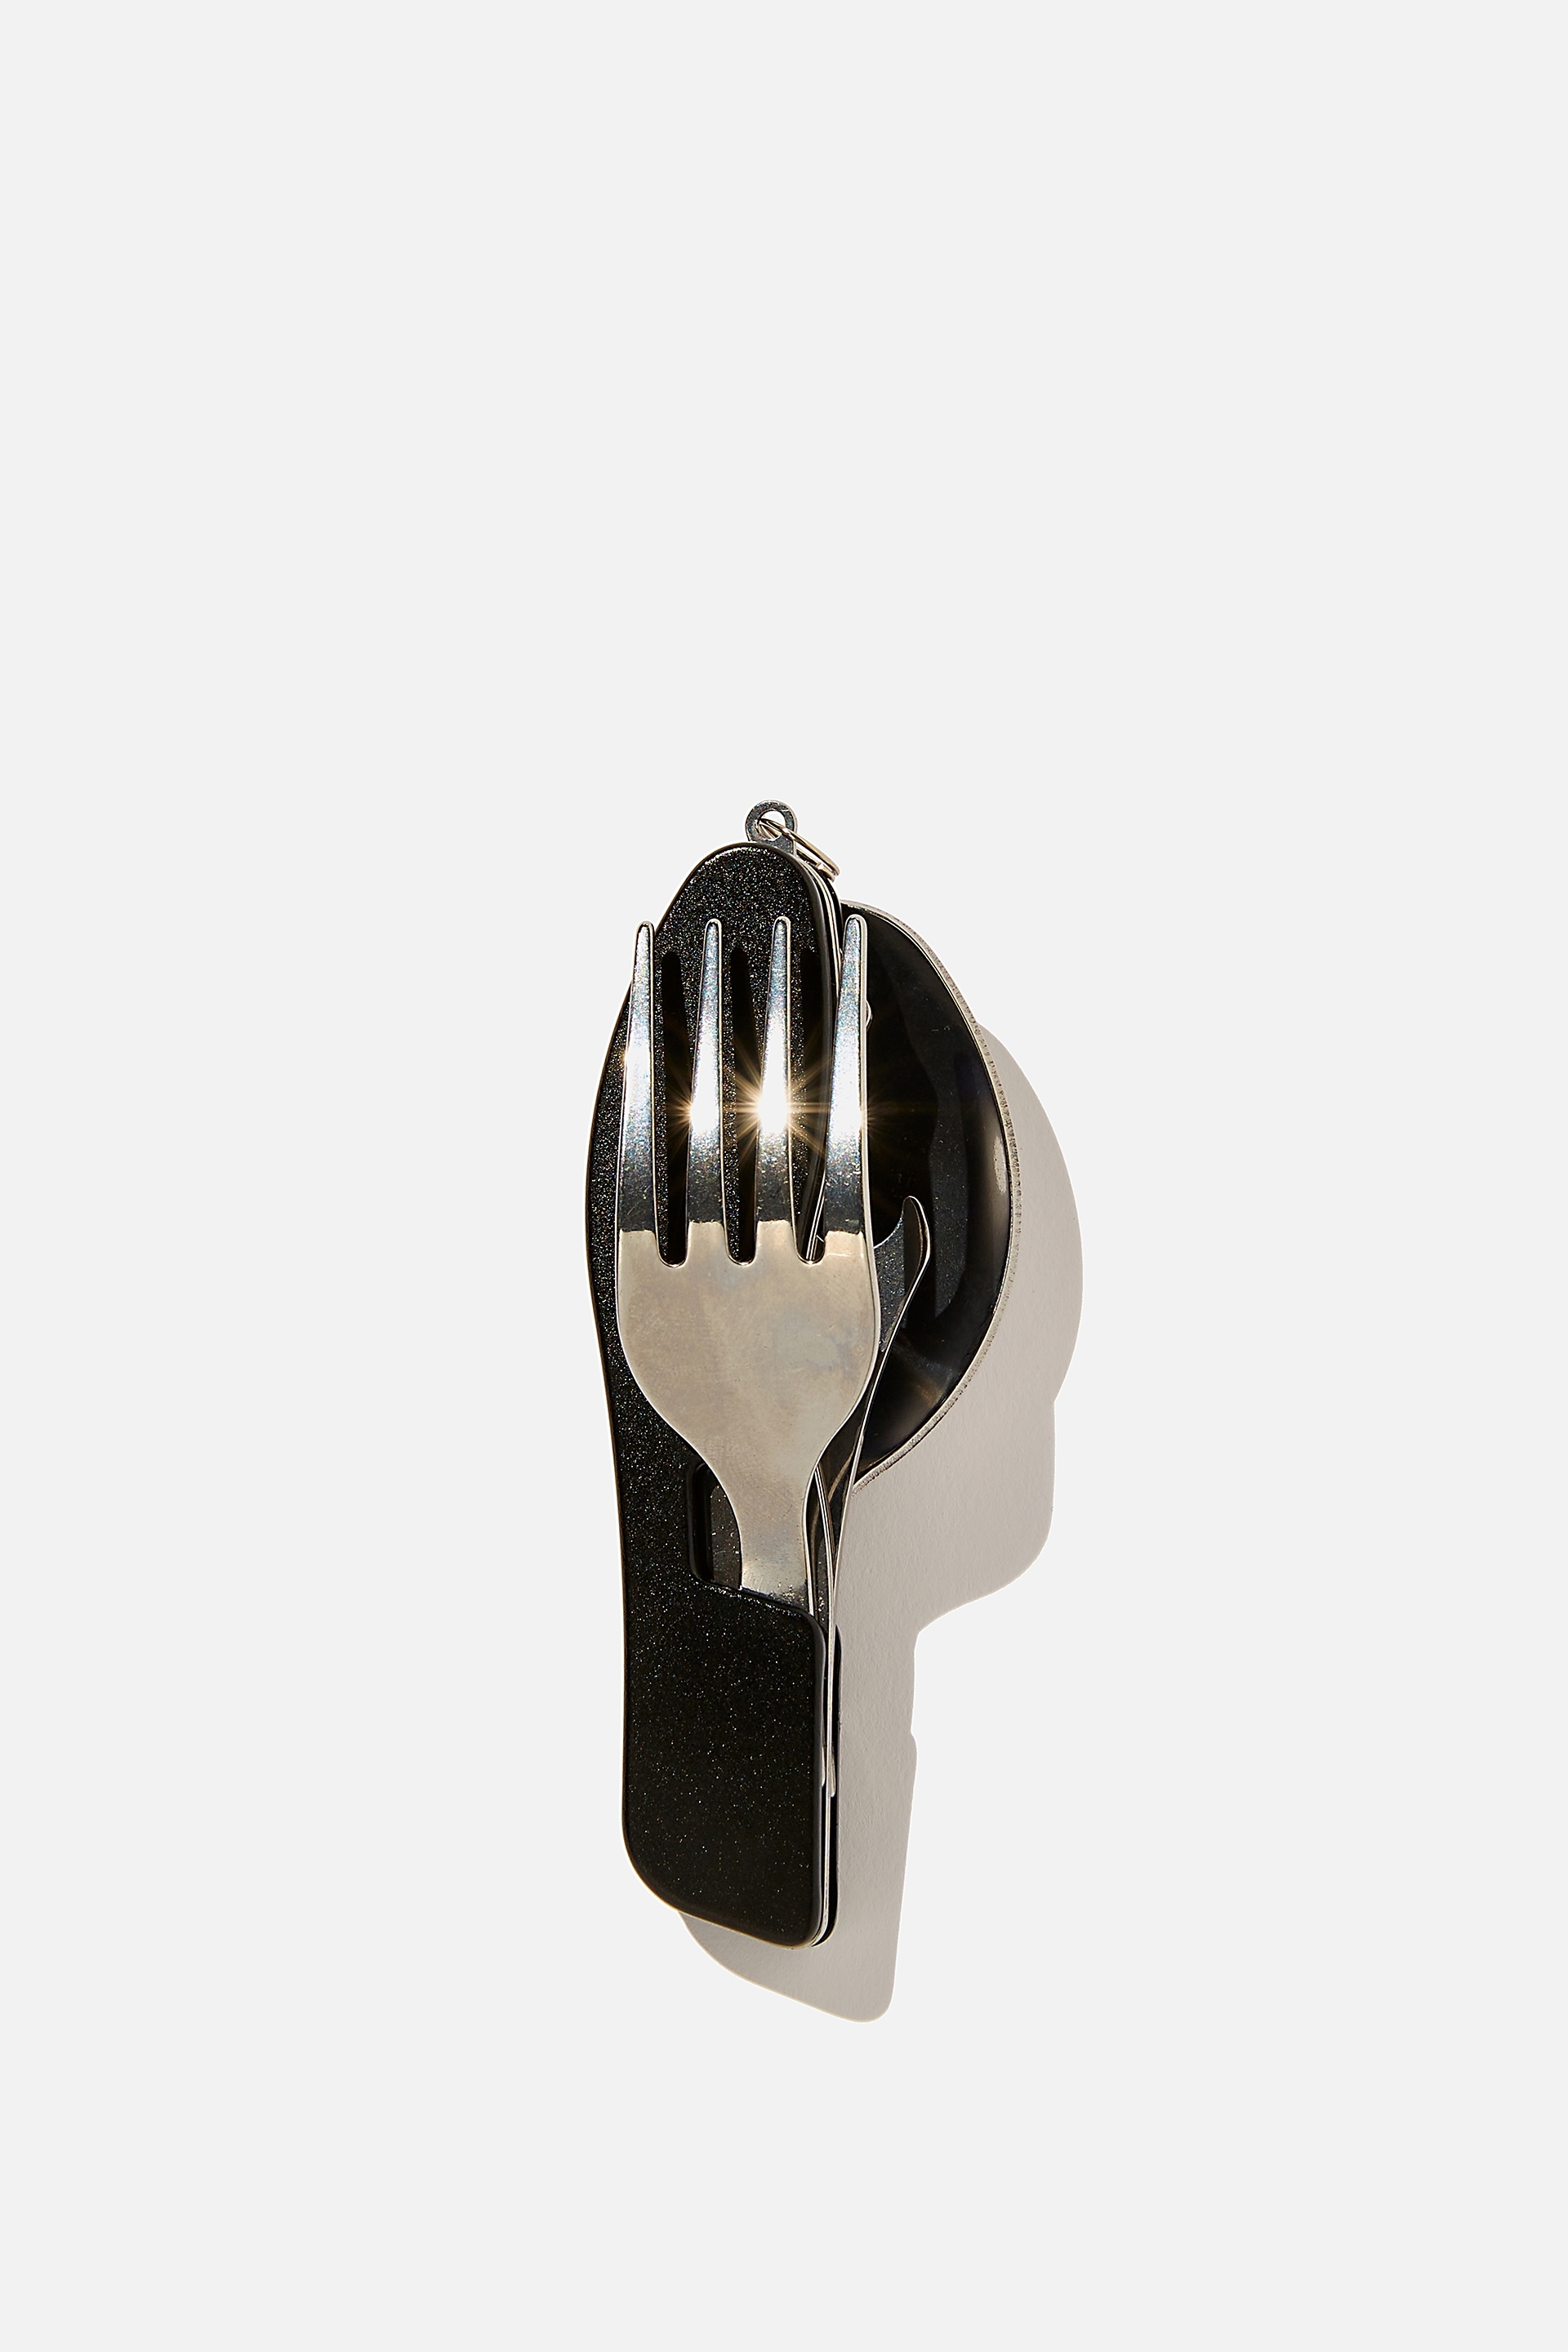 Typo - Pocket Cutlery Set - Black